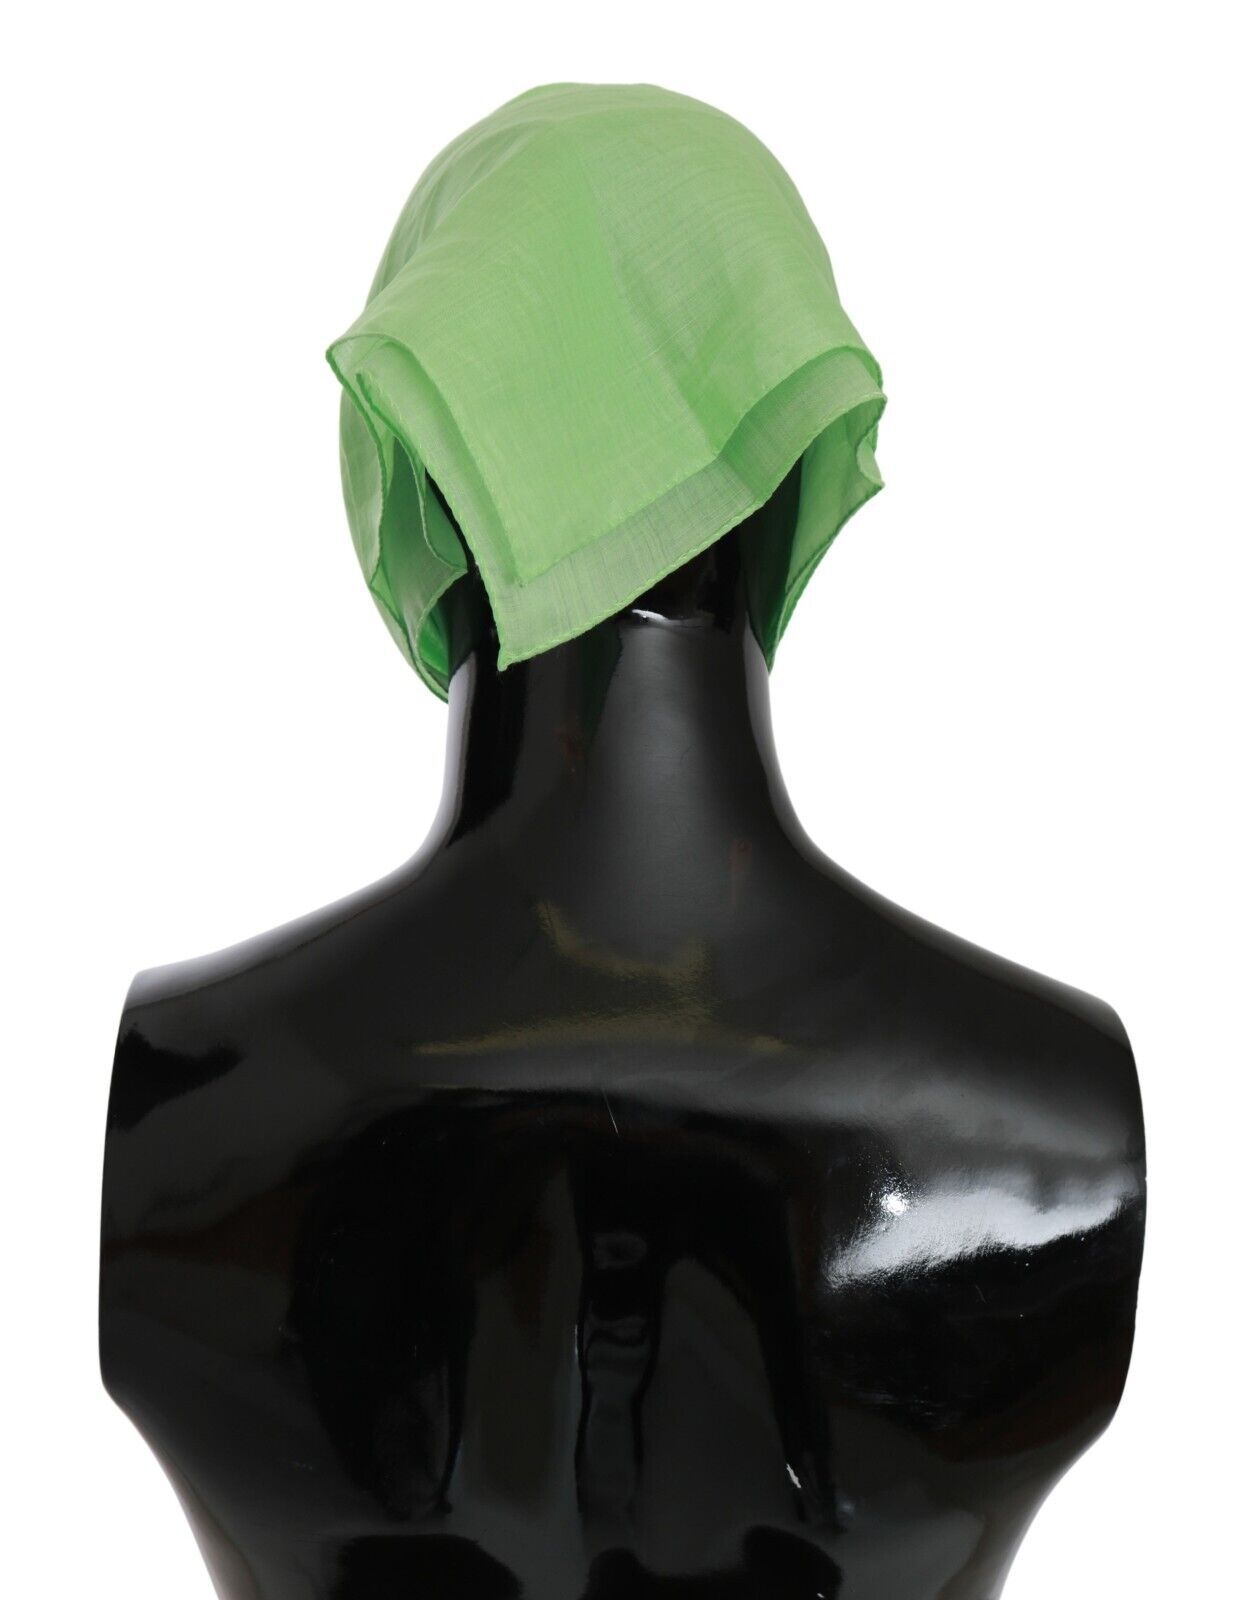 Versace Apple Green Linen Square Foulard Head Wrap Scarf